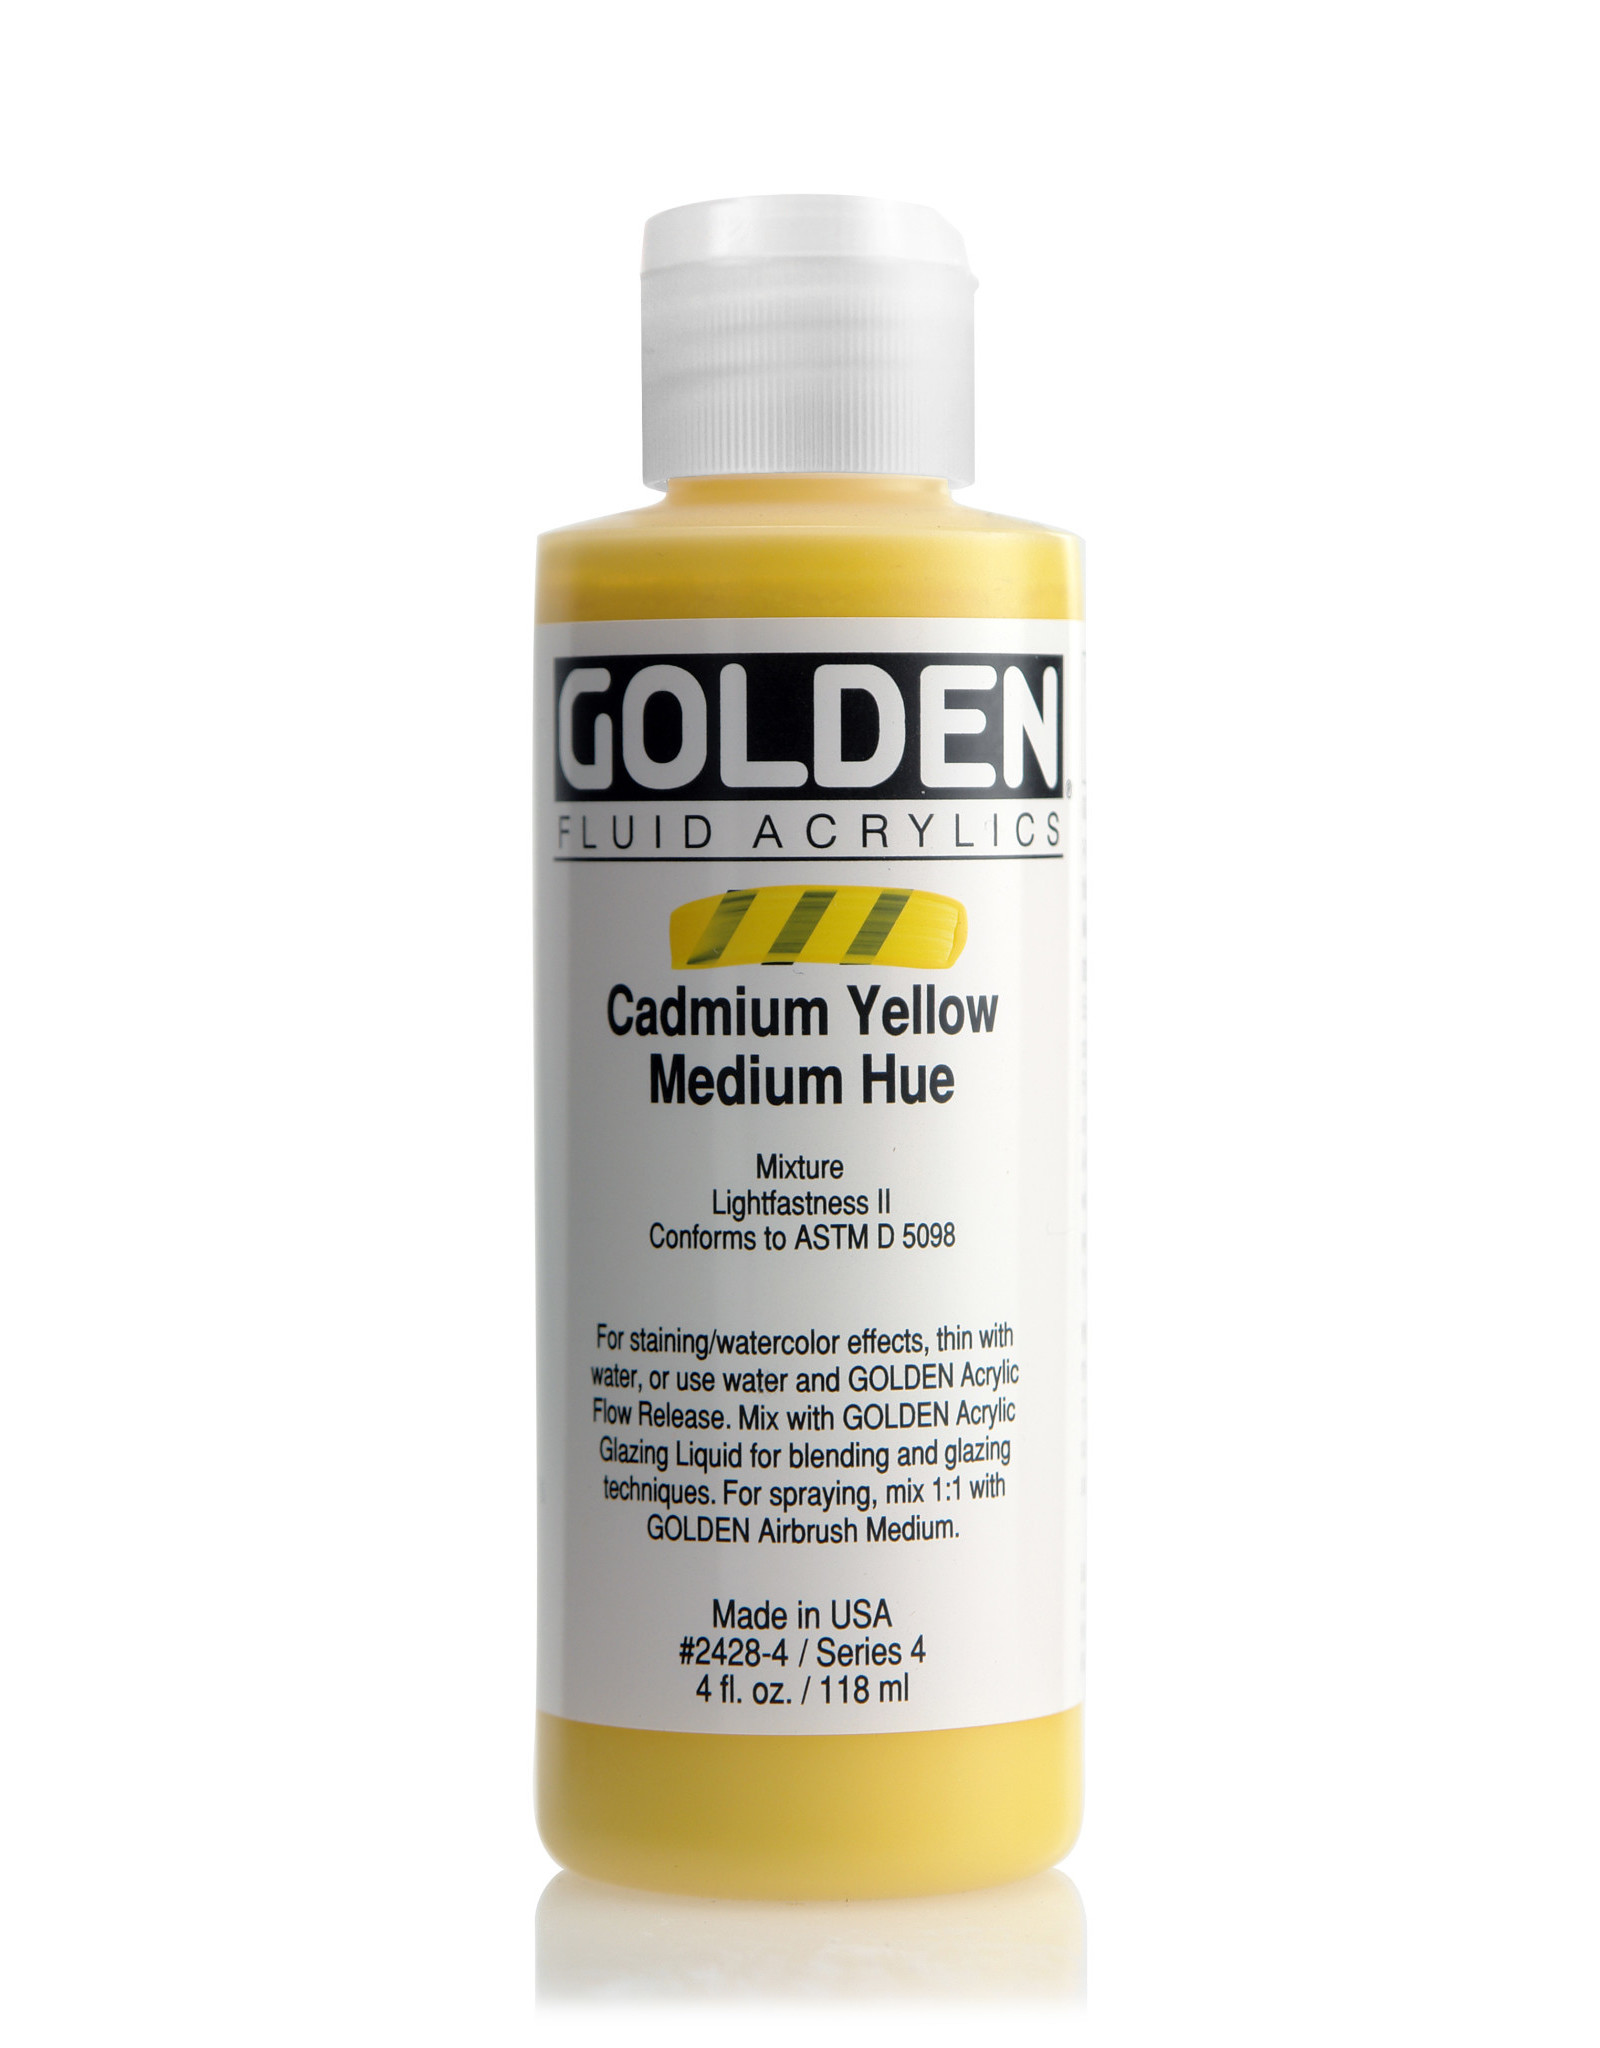 Golden Golden Fluid Acrylics, Cadmium Yellow Medium Hue 4oz Cylinder